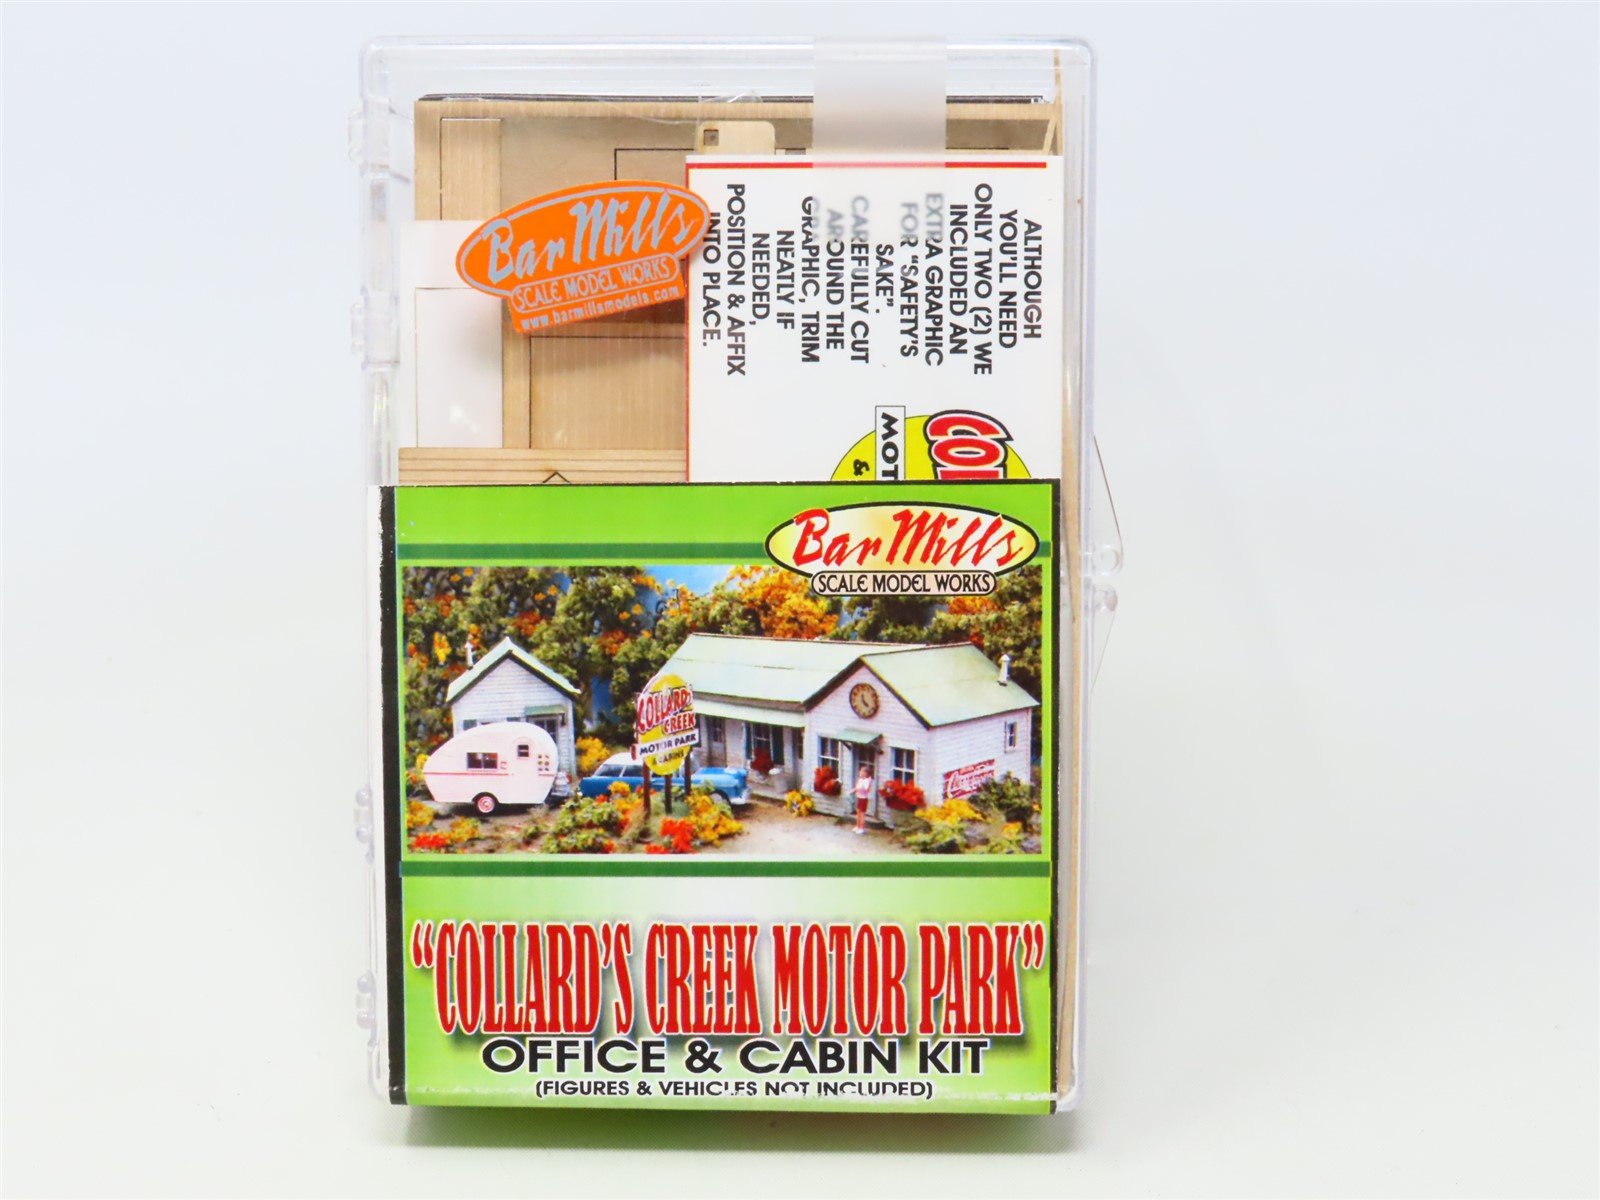 HO Scale Bar Mills Kit #0872 "Collard's Creek Motor Park" Office & Cabin